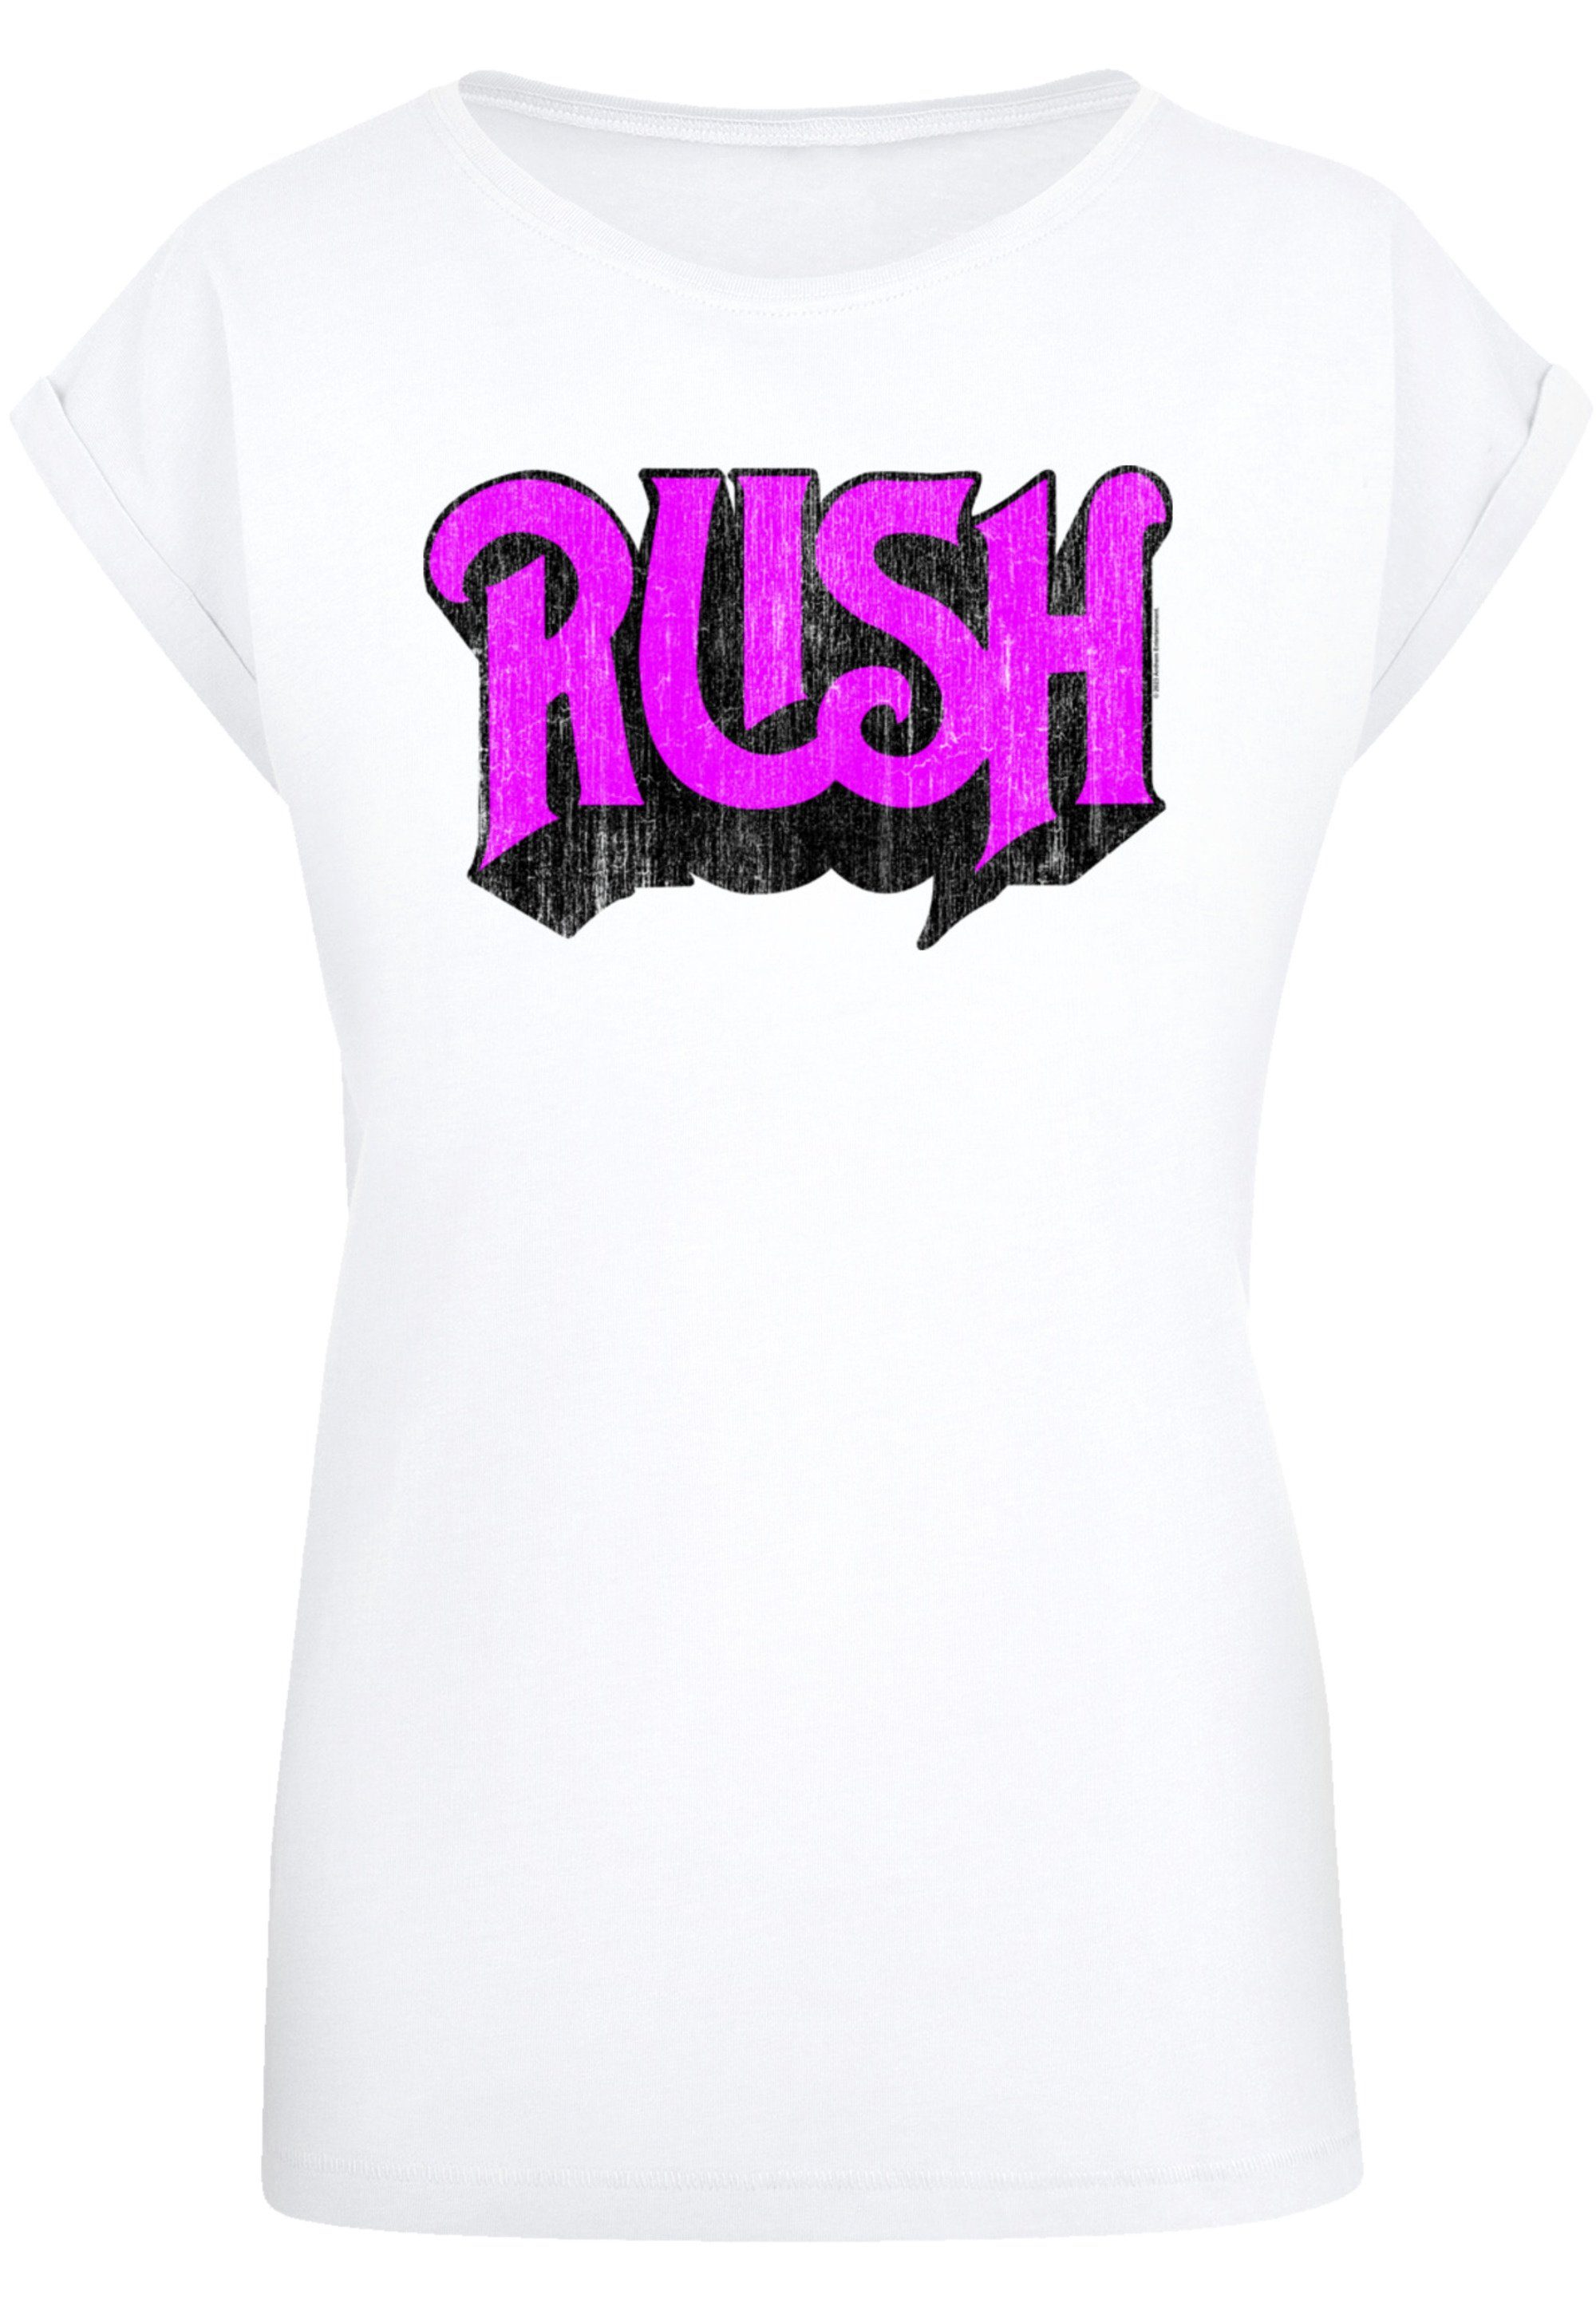 Rock T-Shirt Rush Qualität Band F4NT4STIC Distressed Logo weiß Premium